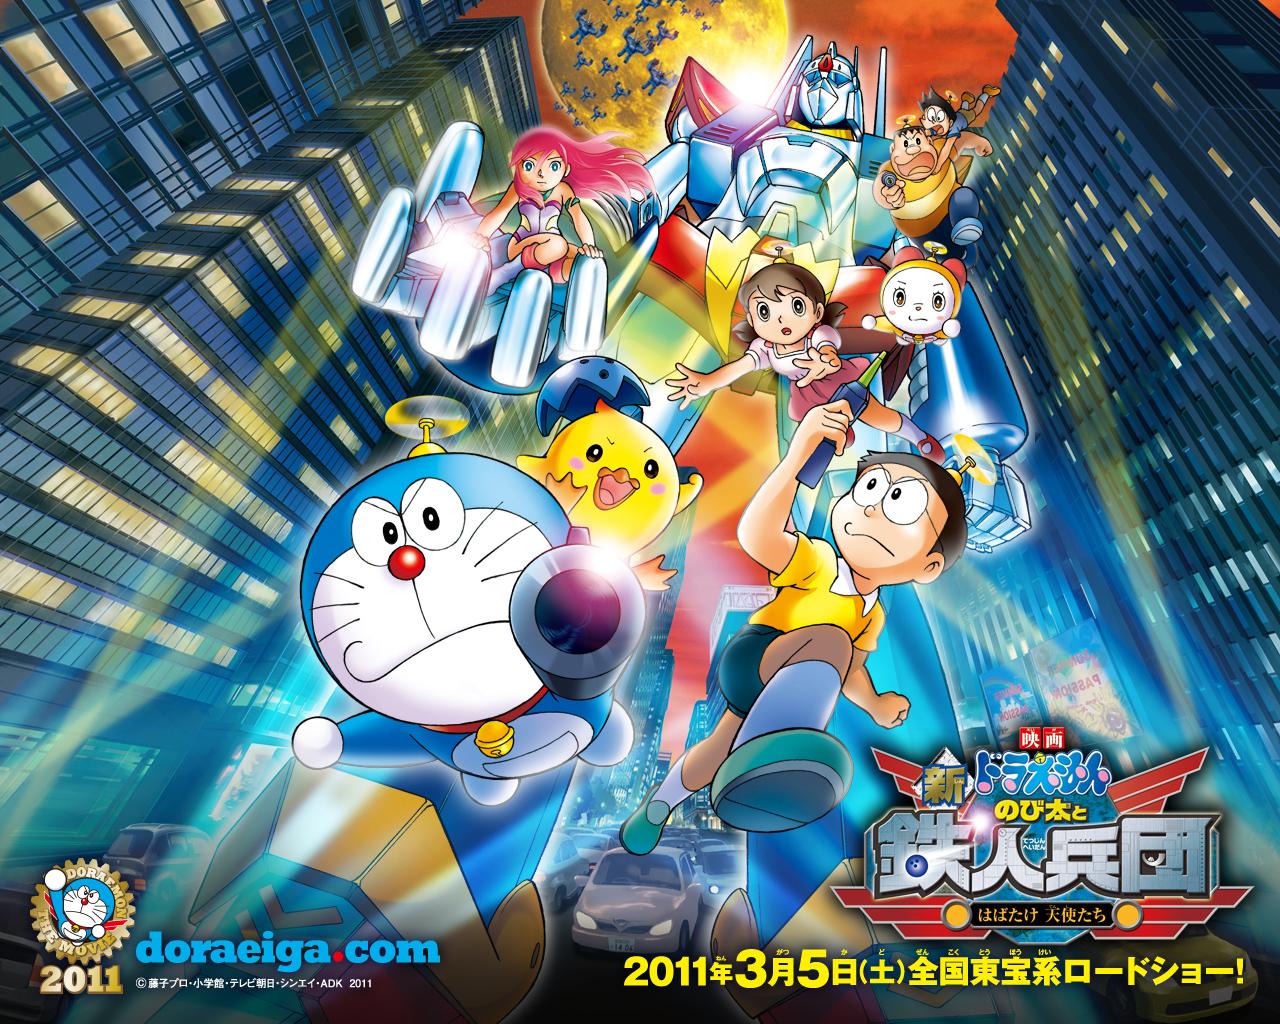 Manga And Anime Wallpaper: Doraemon The Movie Wallpaper HD